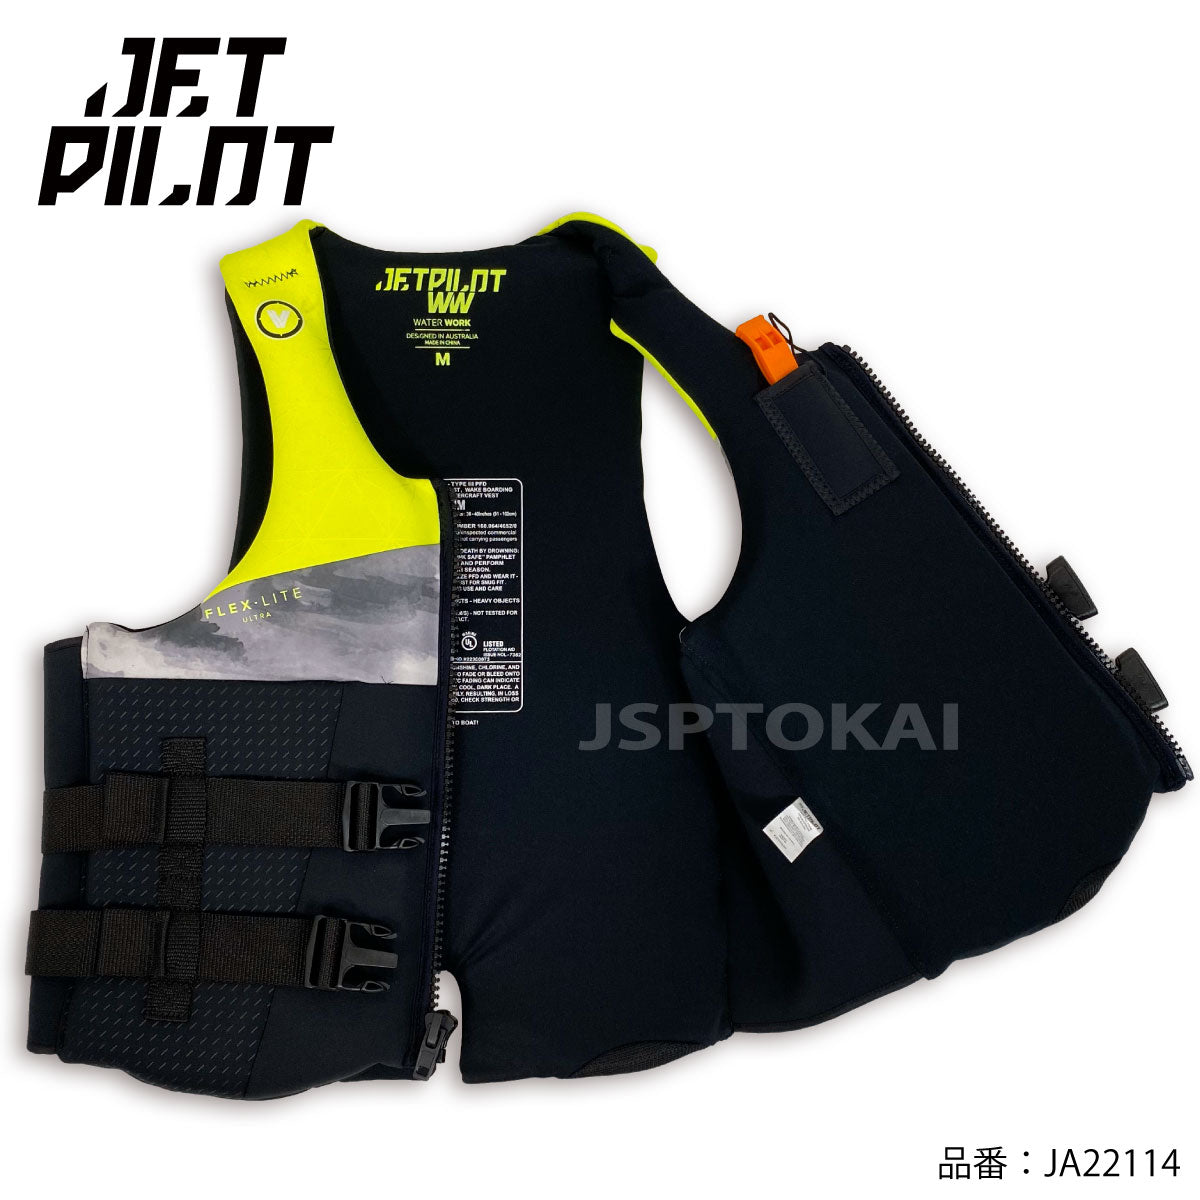 JETPILOT ジェットパイロット VENTURE 正規品 ライフジャケット JCI